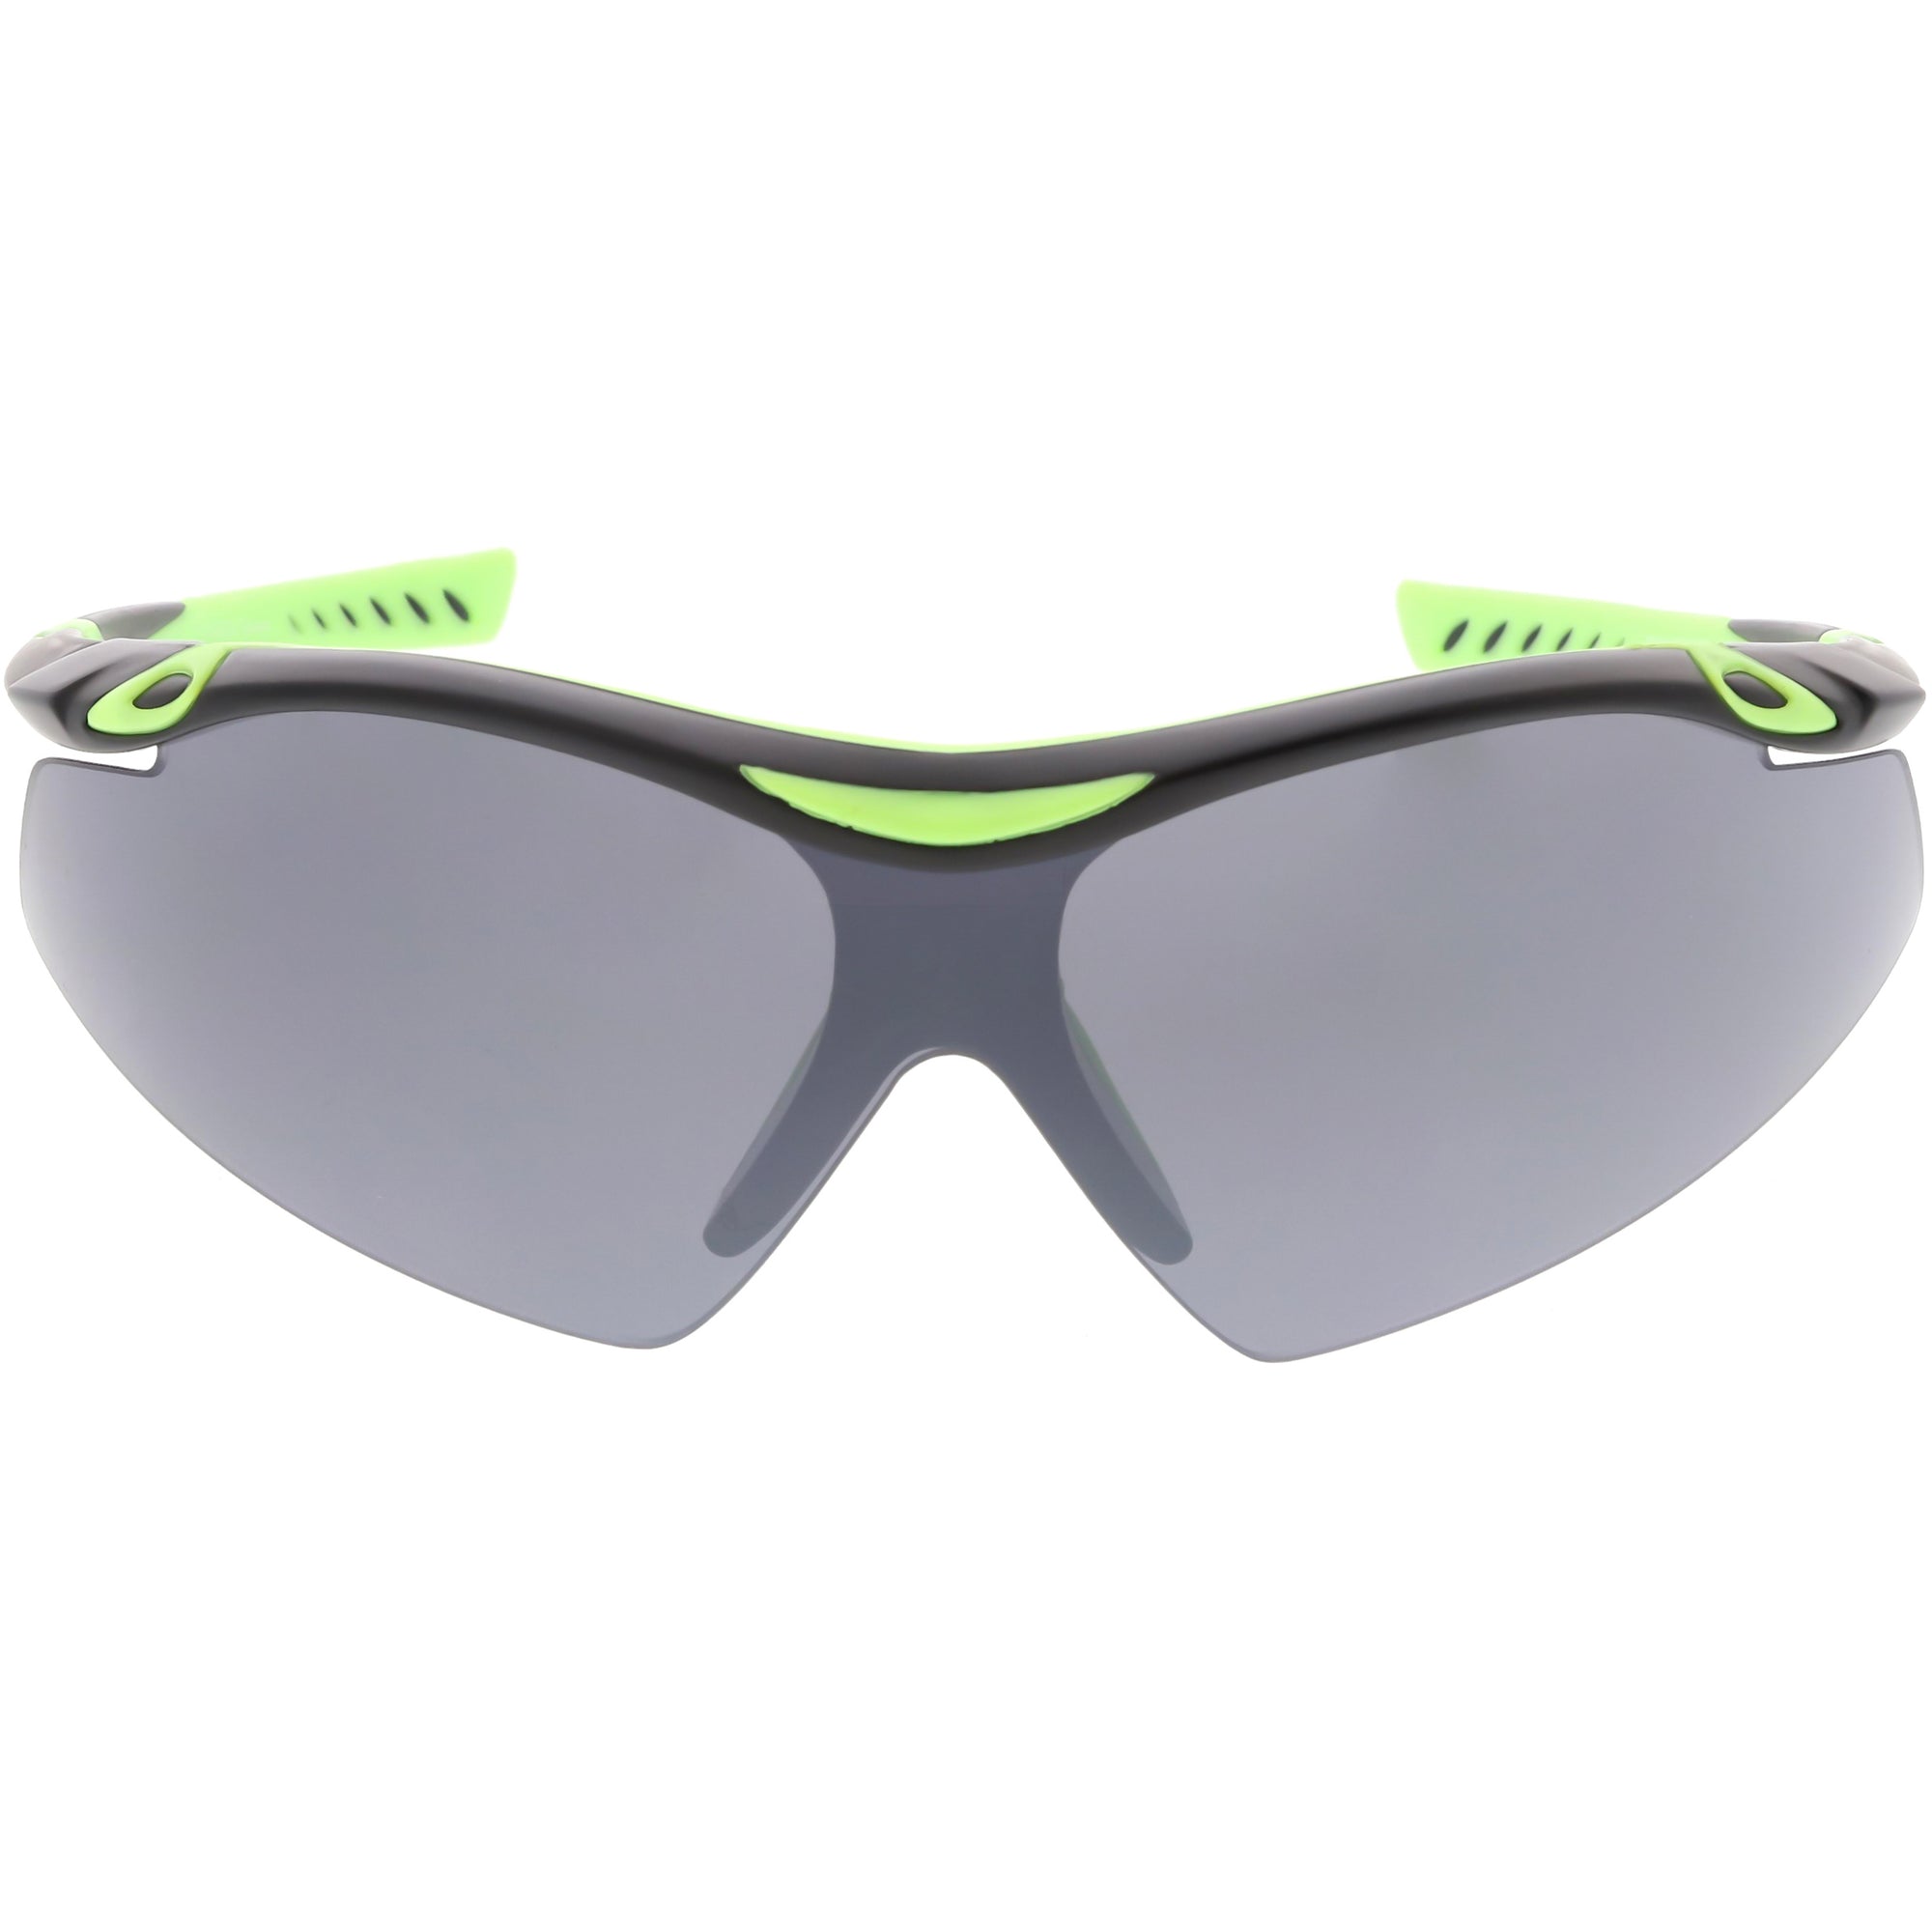 Sunglasses Fashion Frames AOFLY BRAND DESIGN Square Polarized For Men TR90  Frame Driving Sun Glasses Male Fishing Goggle Zonnebril Heren UV400 Q231219  From Designerjewelry666, $7.88